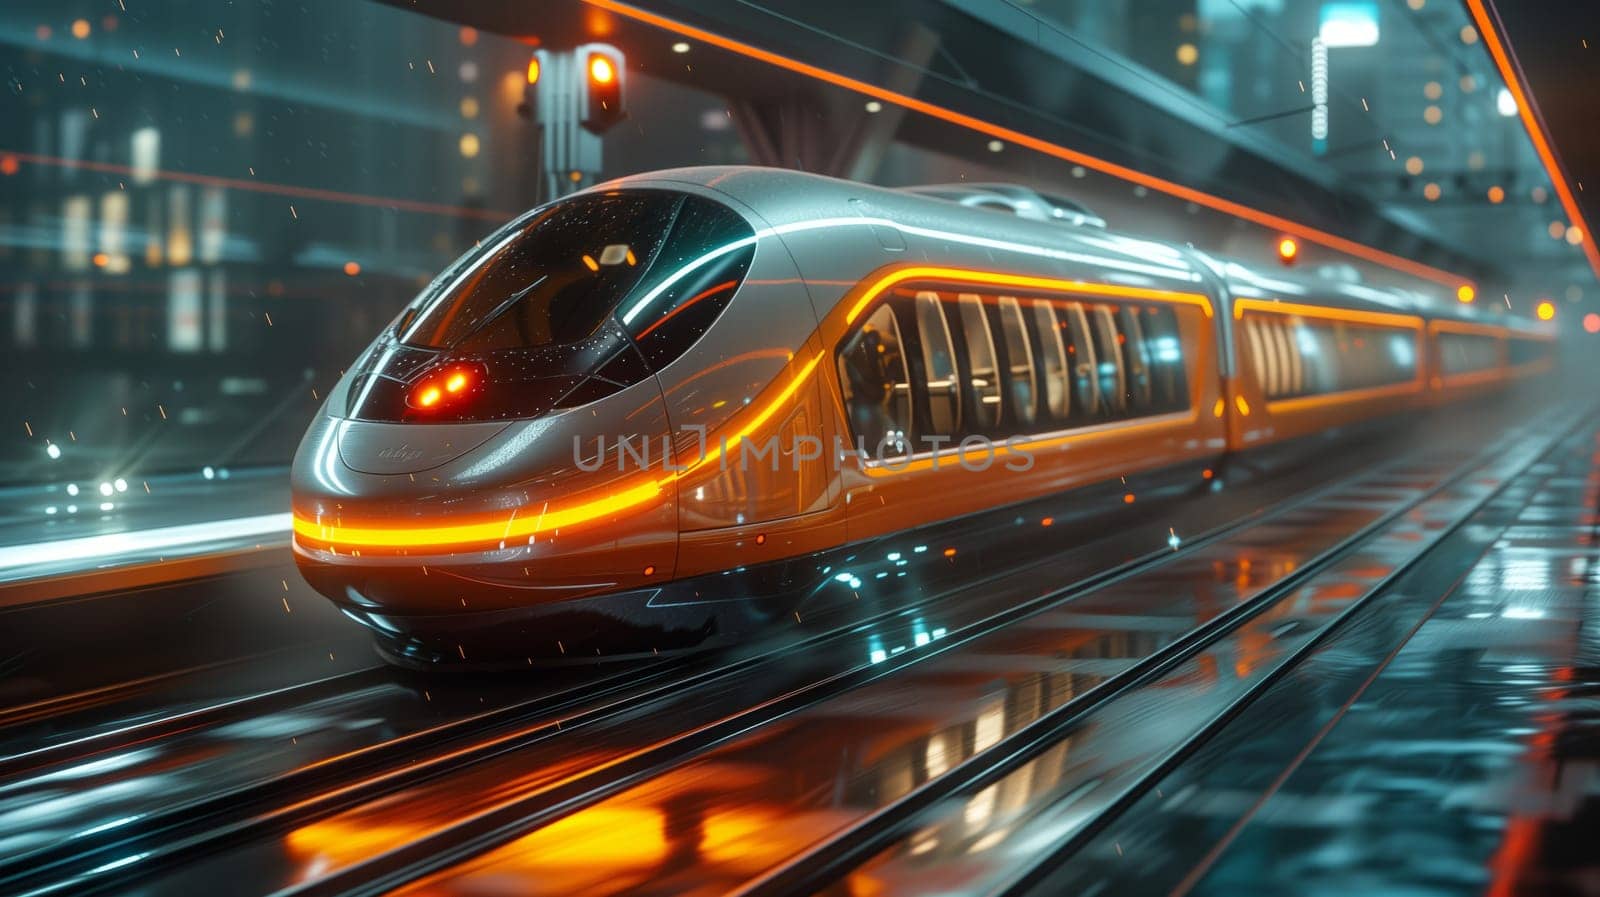 Bullet train speeding on tracks at night with futuristic automotive lighting by richwolf